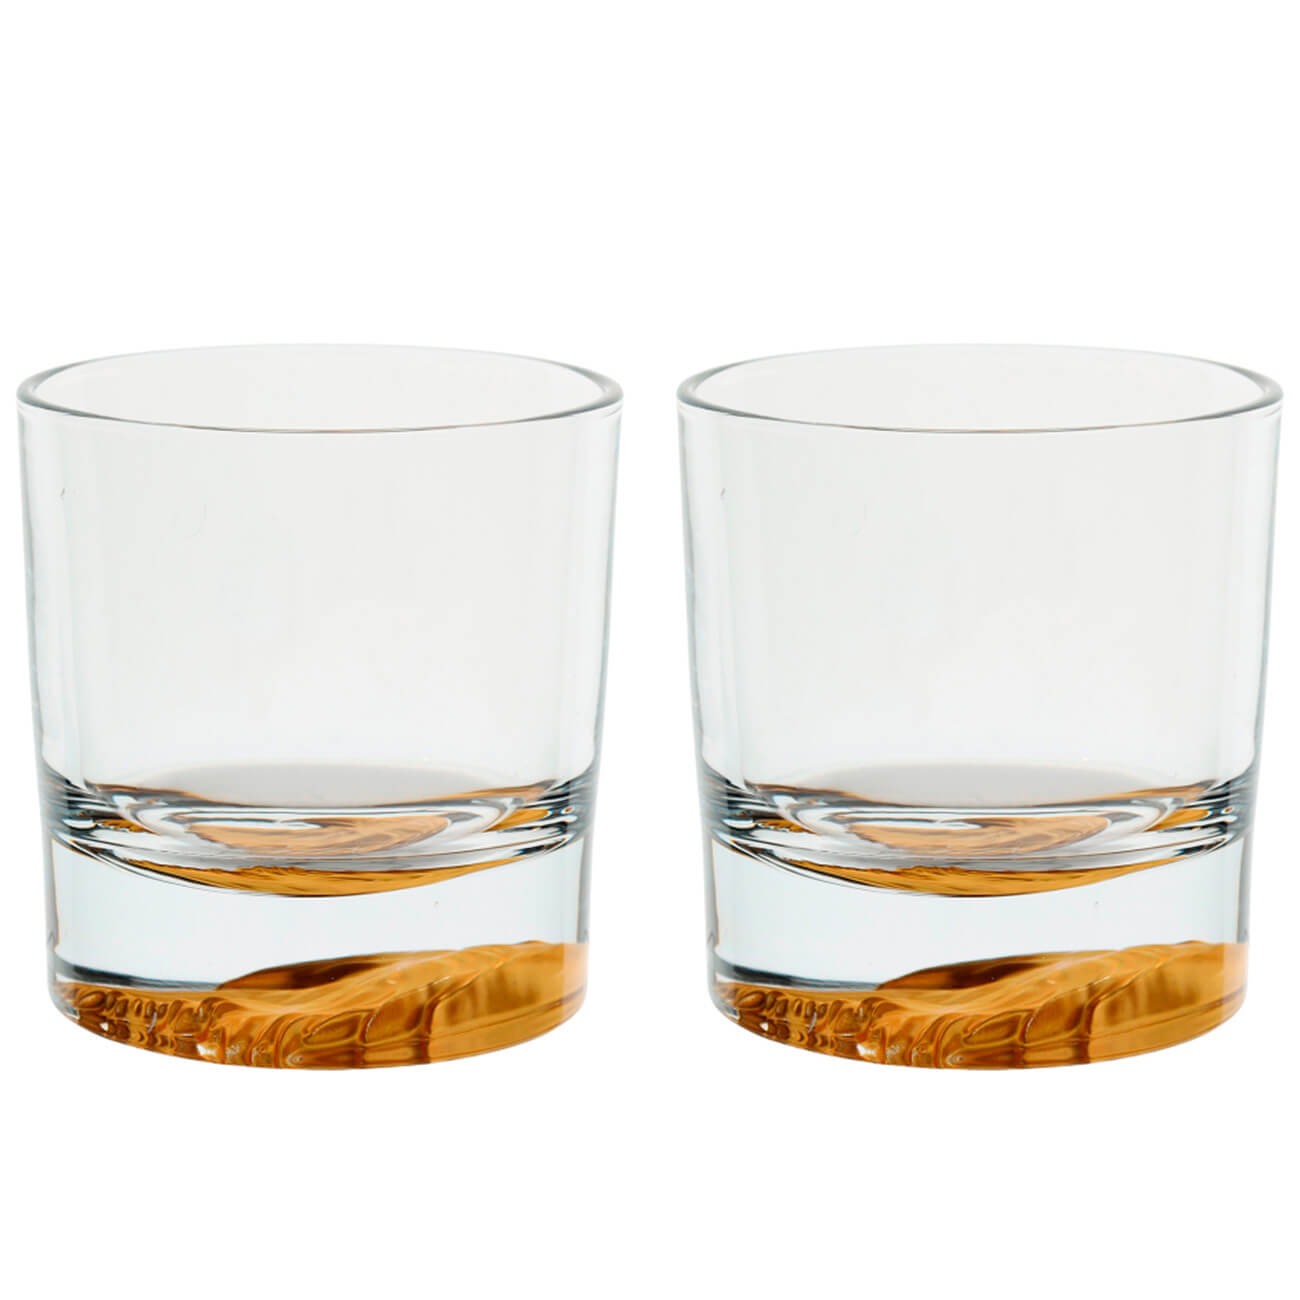 стакан для виски crystalex идеал набор 6 шт стекло 00895 Стакан для виски, 300 мл, 2 шт, стекло, Орел, Elements